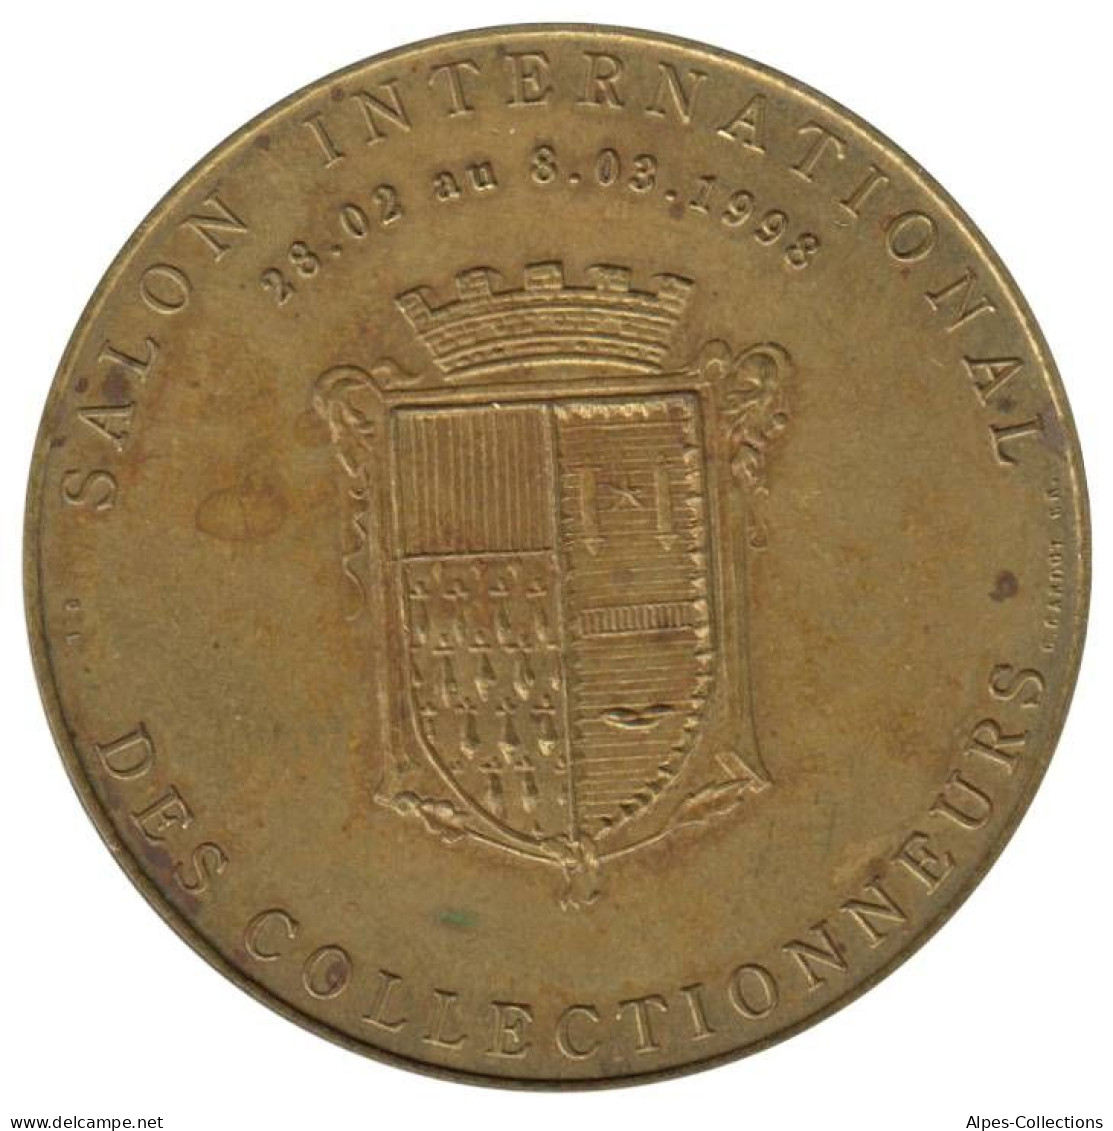 ROUBAIX - EU0010.1 - 1 EURO DES VILLES - Réf: NR - 1998 - Euros De Las Ciudades